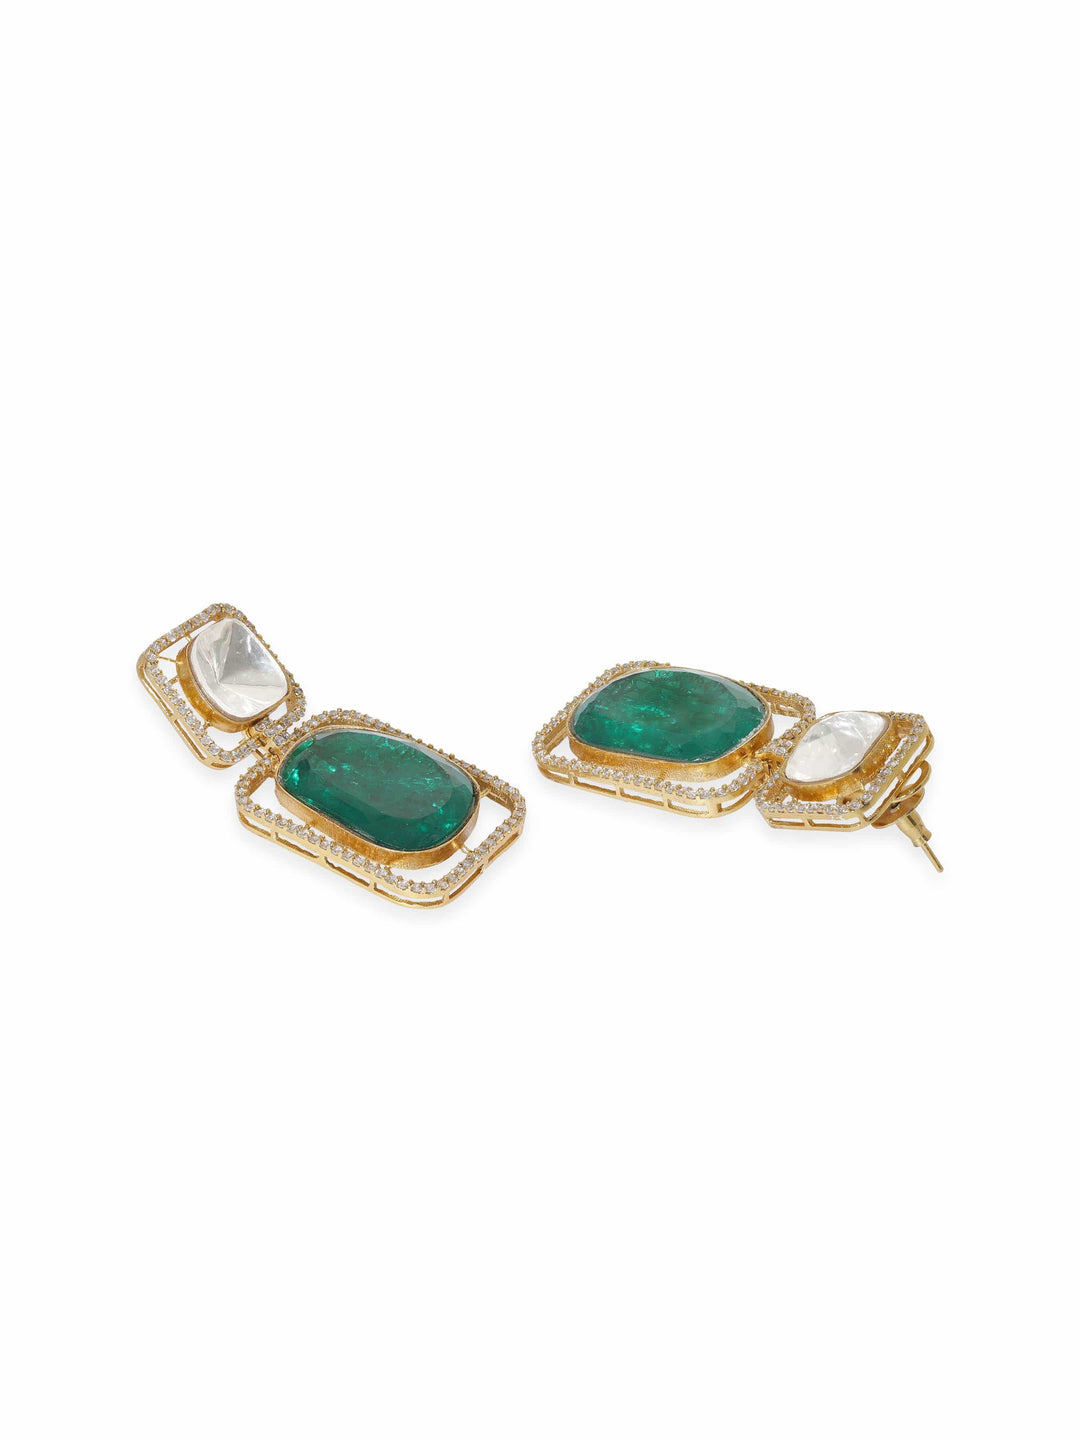 Rubans Radiant Green Stone Reverse Ad Wedding Necklace Set" Jewellery Sets